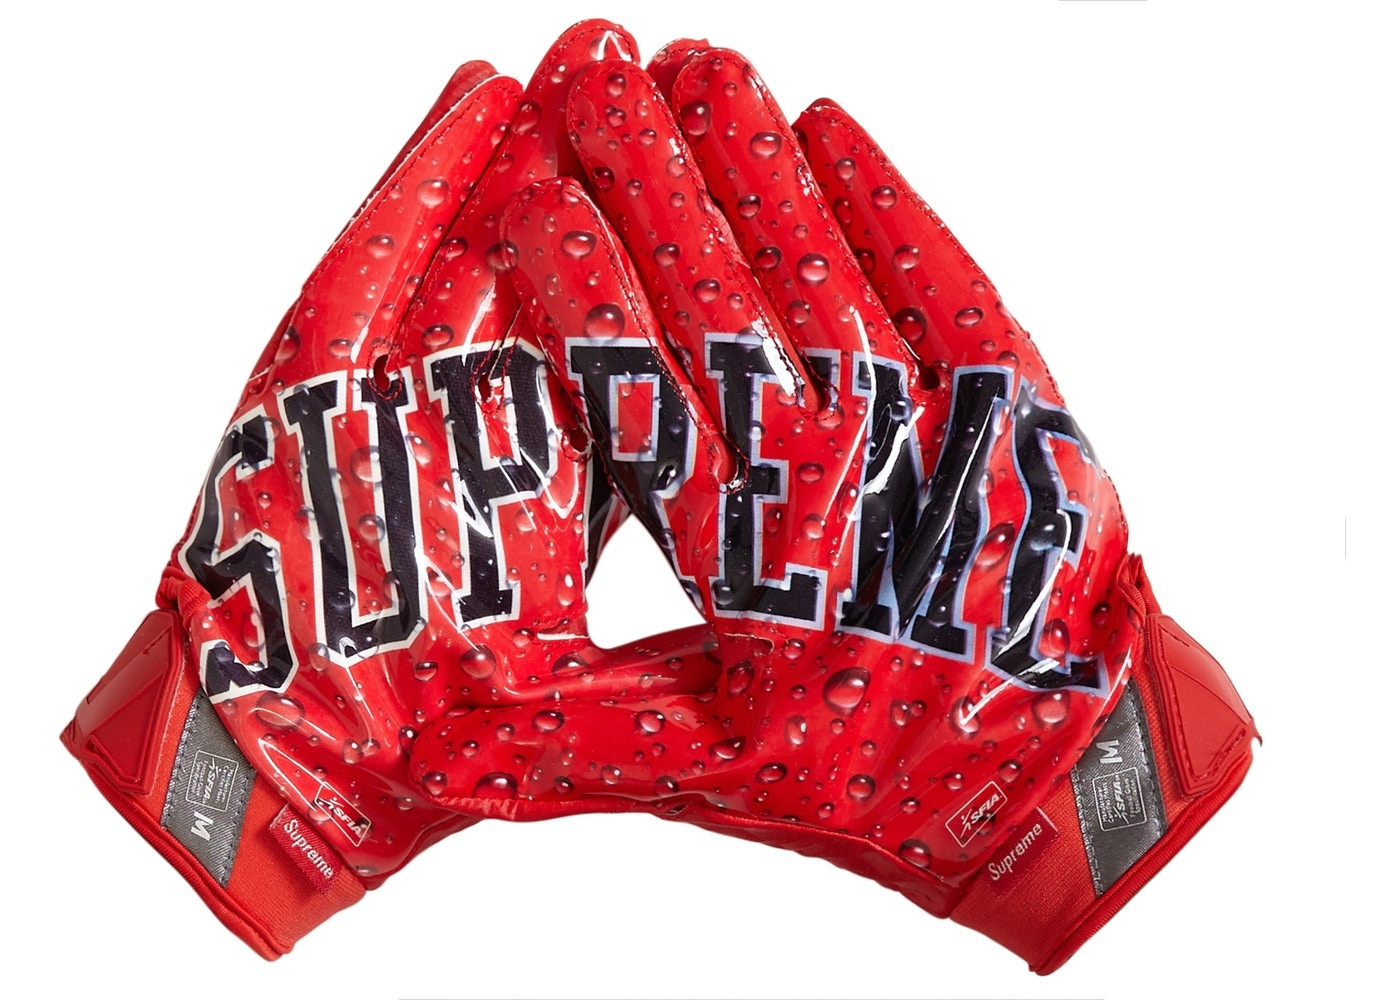 Supreme x Nike Vapor Jet 4.0 Football Gloves 'Red